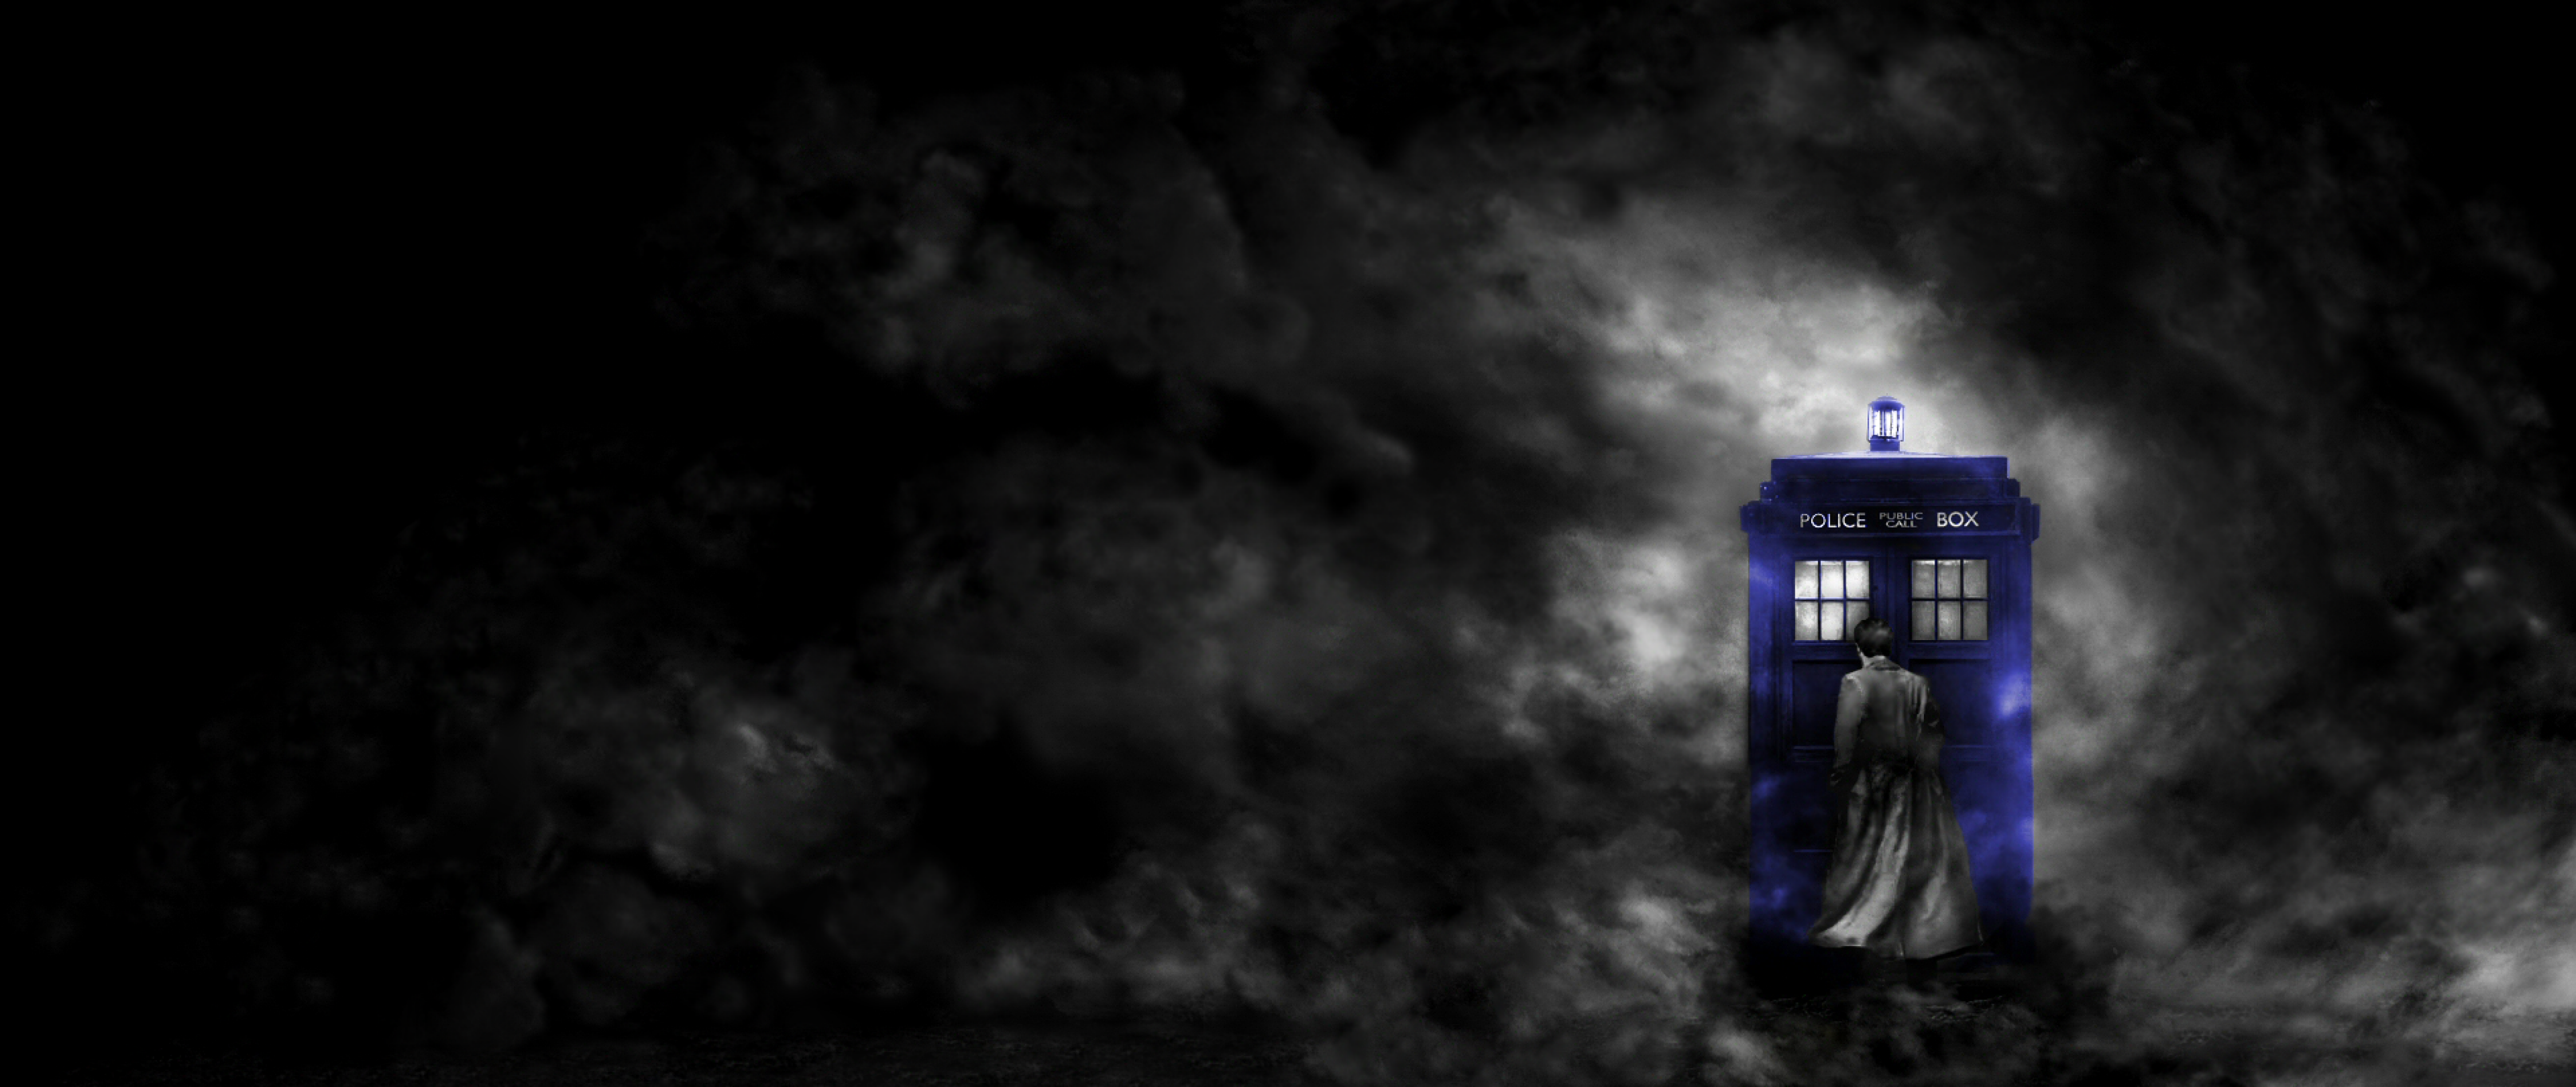 Doctor Who Tardis Wallpaper for Desktop and Mobiles 4K Ultra HD Wide TV -  HD Wallpaper 